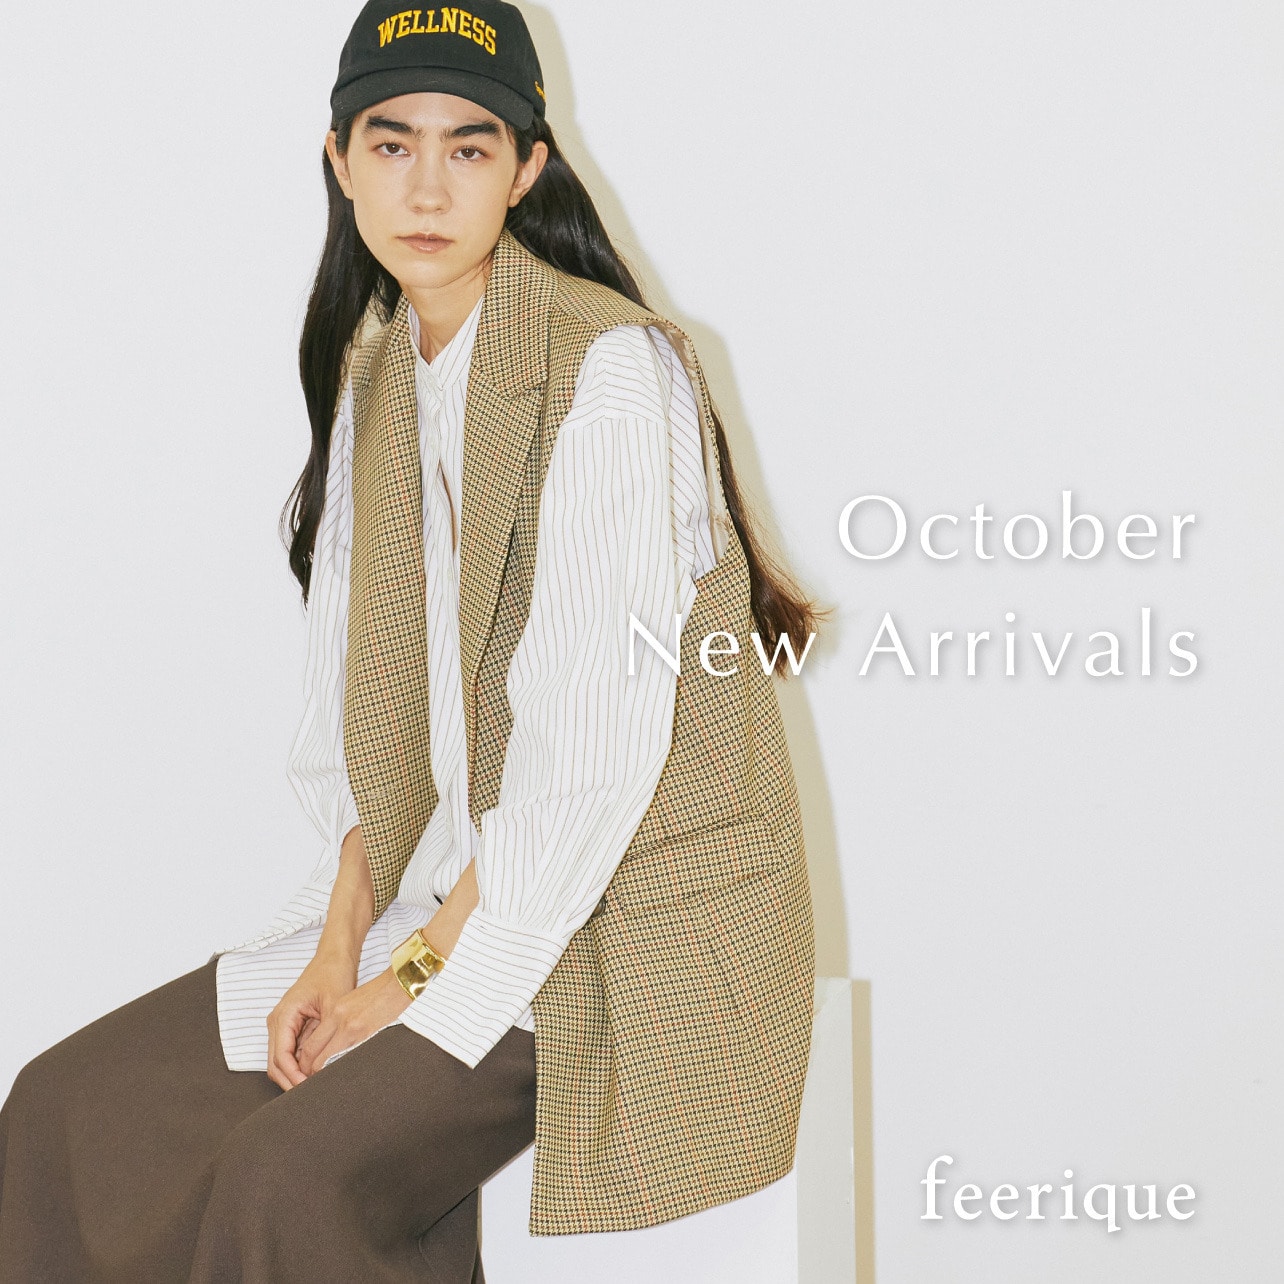 【feerique】NEW ARRIVALS /OCTOBER